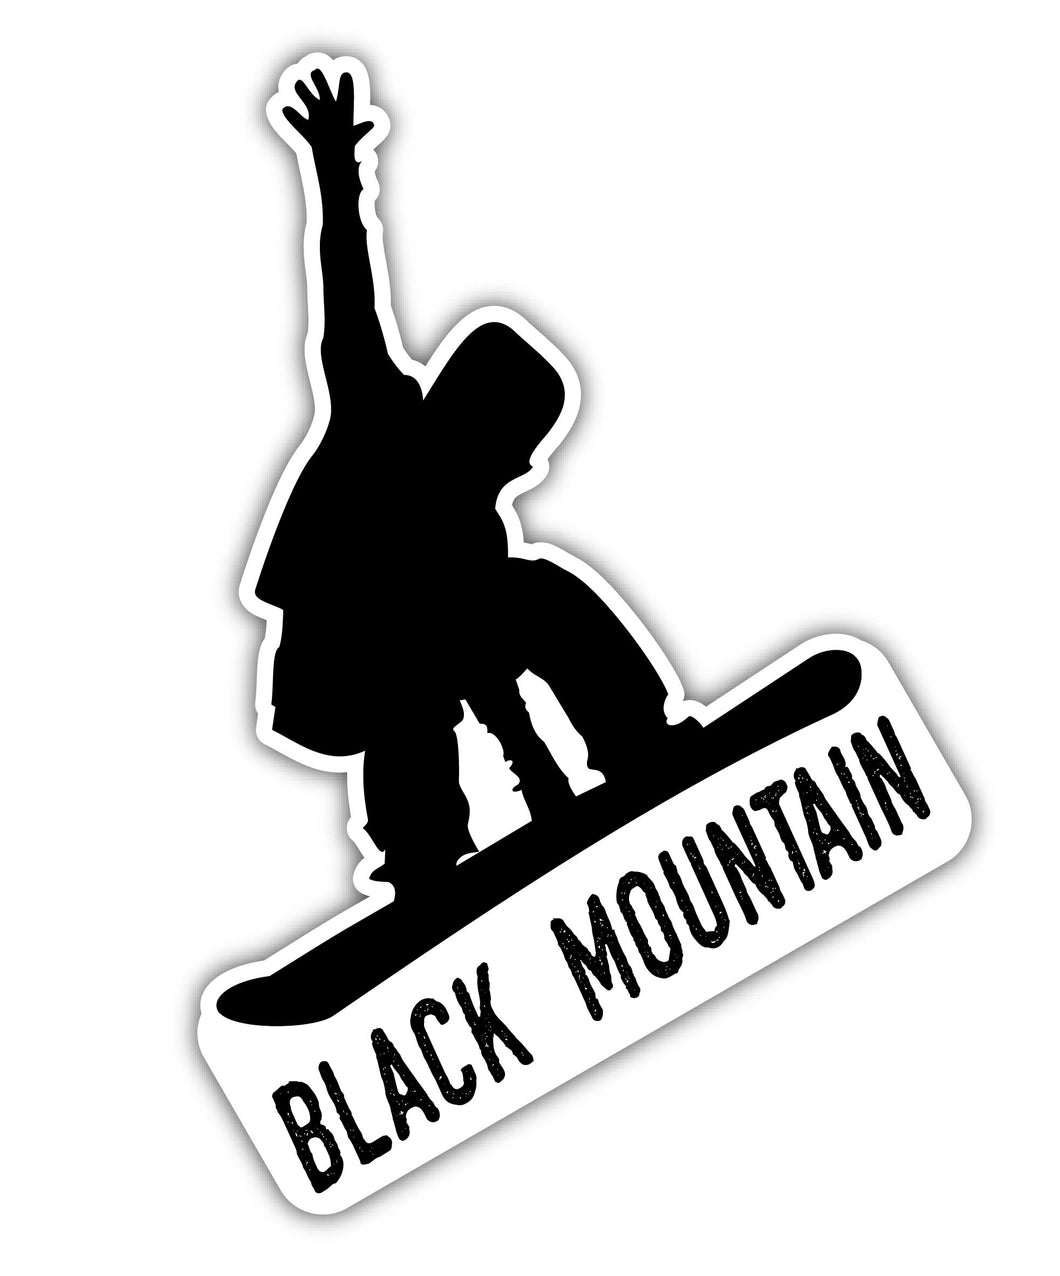 Black Mountain New Hampshire Ski Adventures Souvenir Approximately 5 x 2.5-Inch Vinyl Decal Sticker Goggle Design